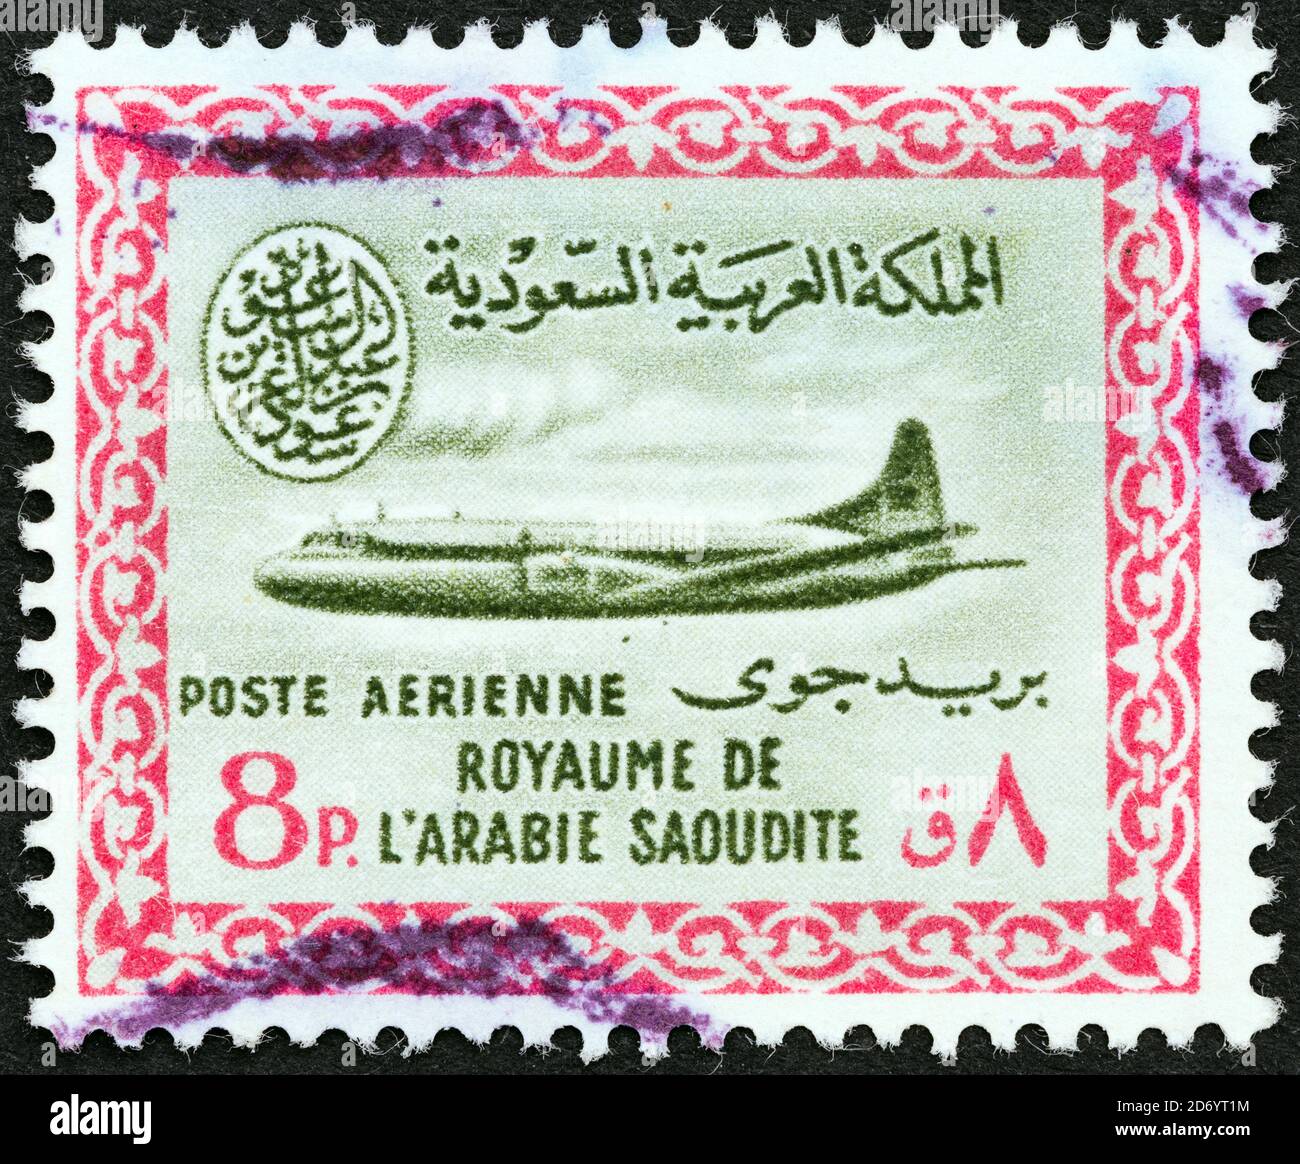 SAUDI ARABIA - CIRCA 1960: A stamp printed in Saudi Arabia shows a Convair 440 airplane, circa 1960. Stock Photo